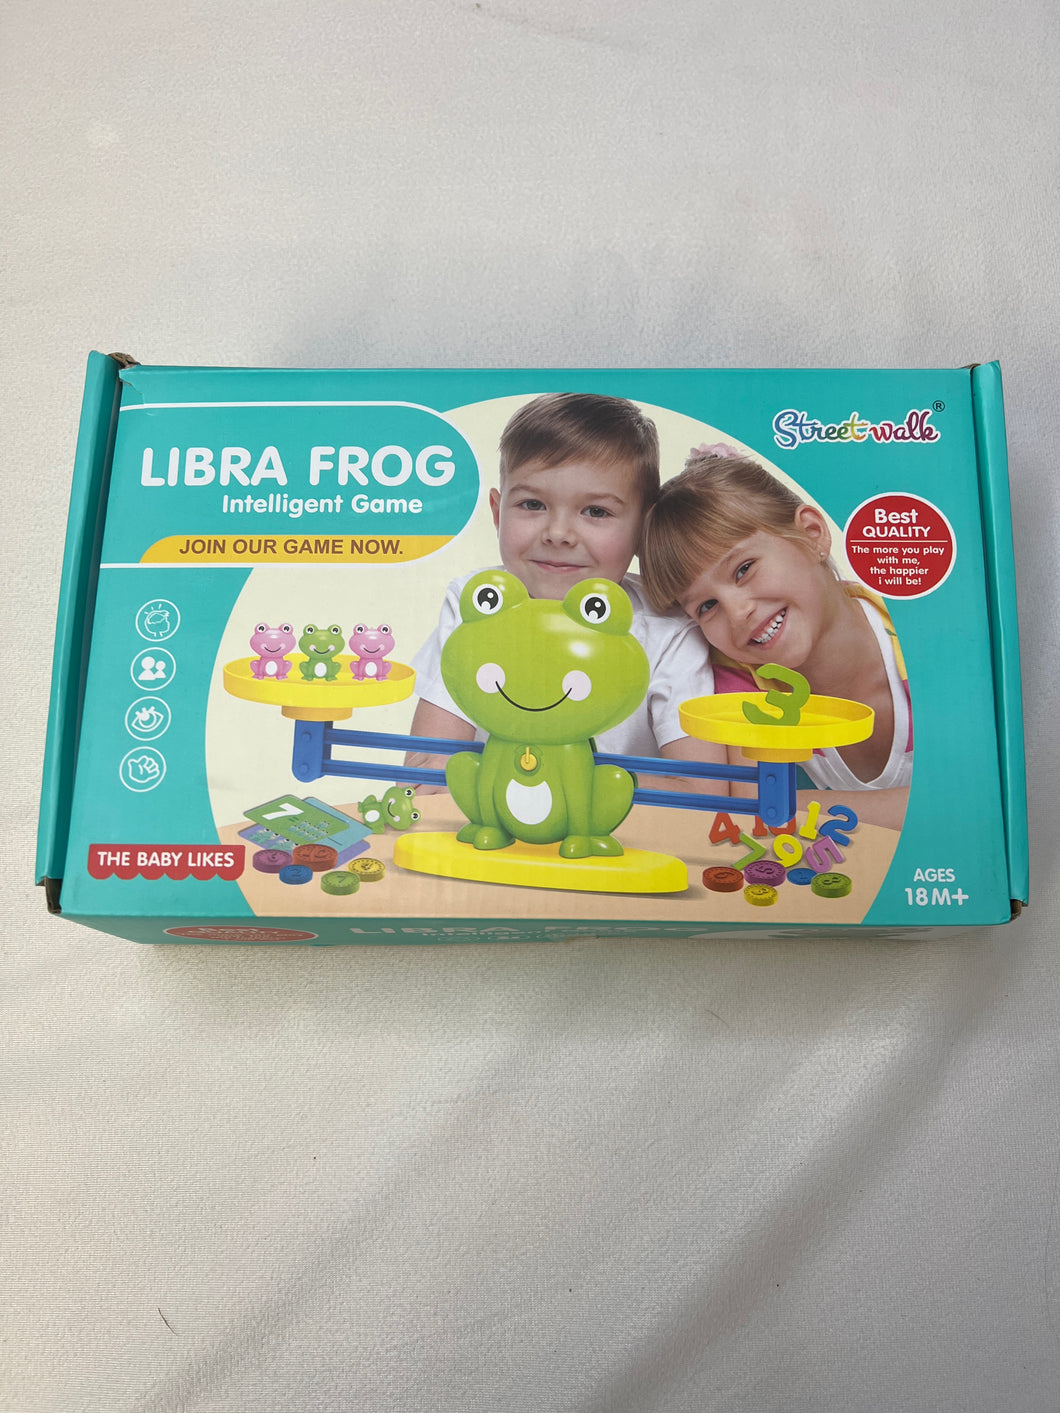 Libra Frog Intelligent Game